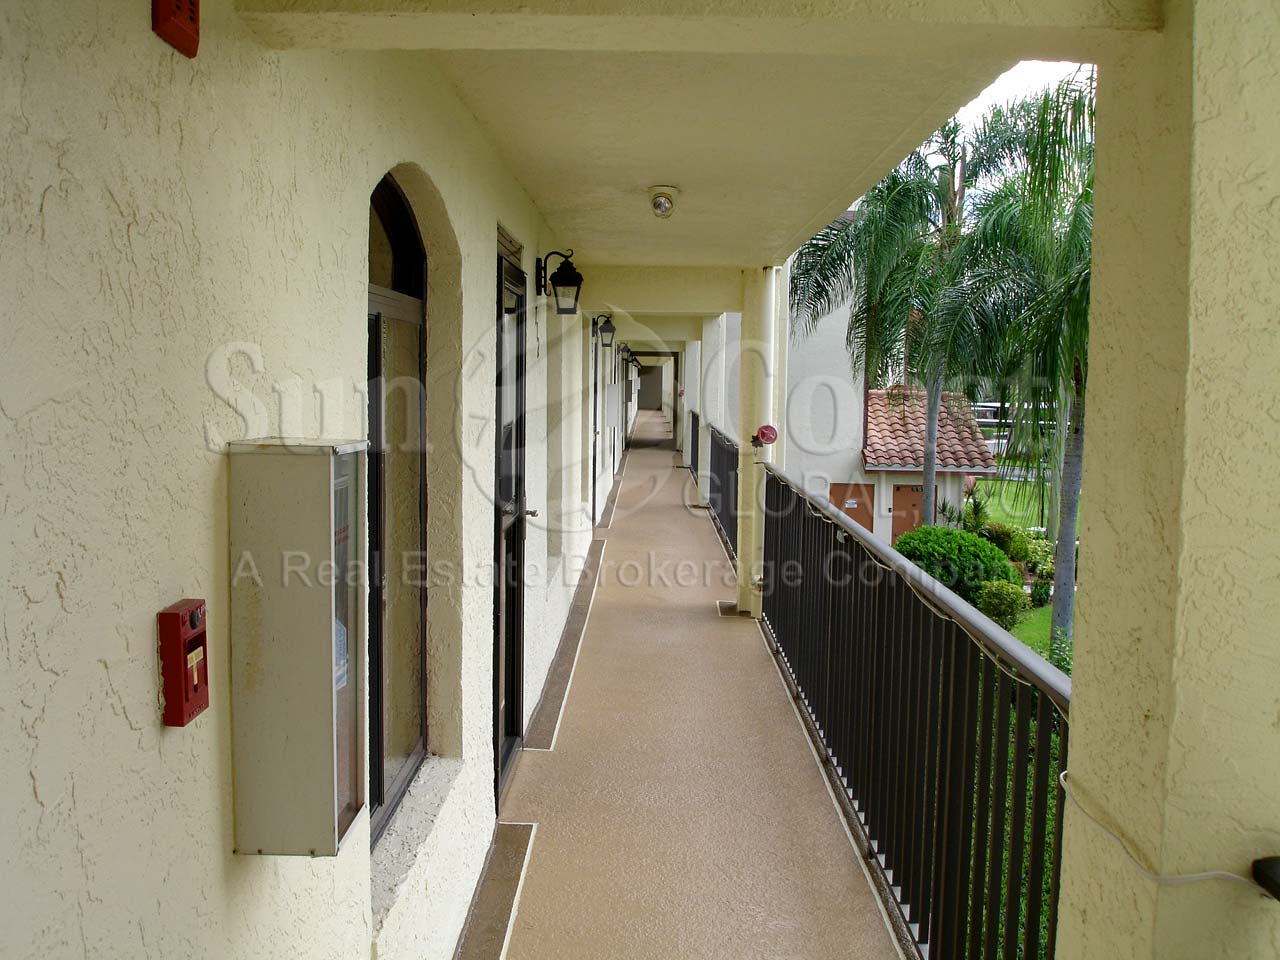 Country Manor Outdoor Hallway to the Condominiums 